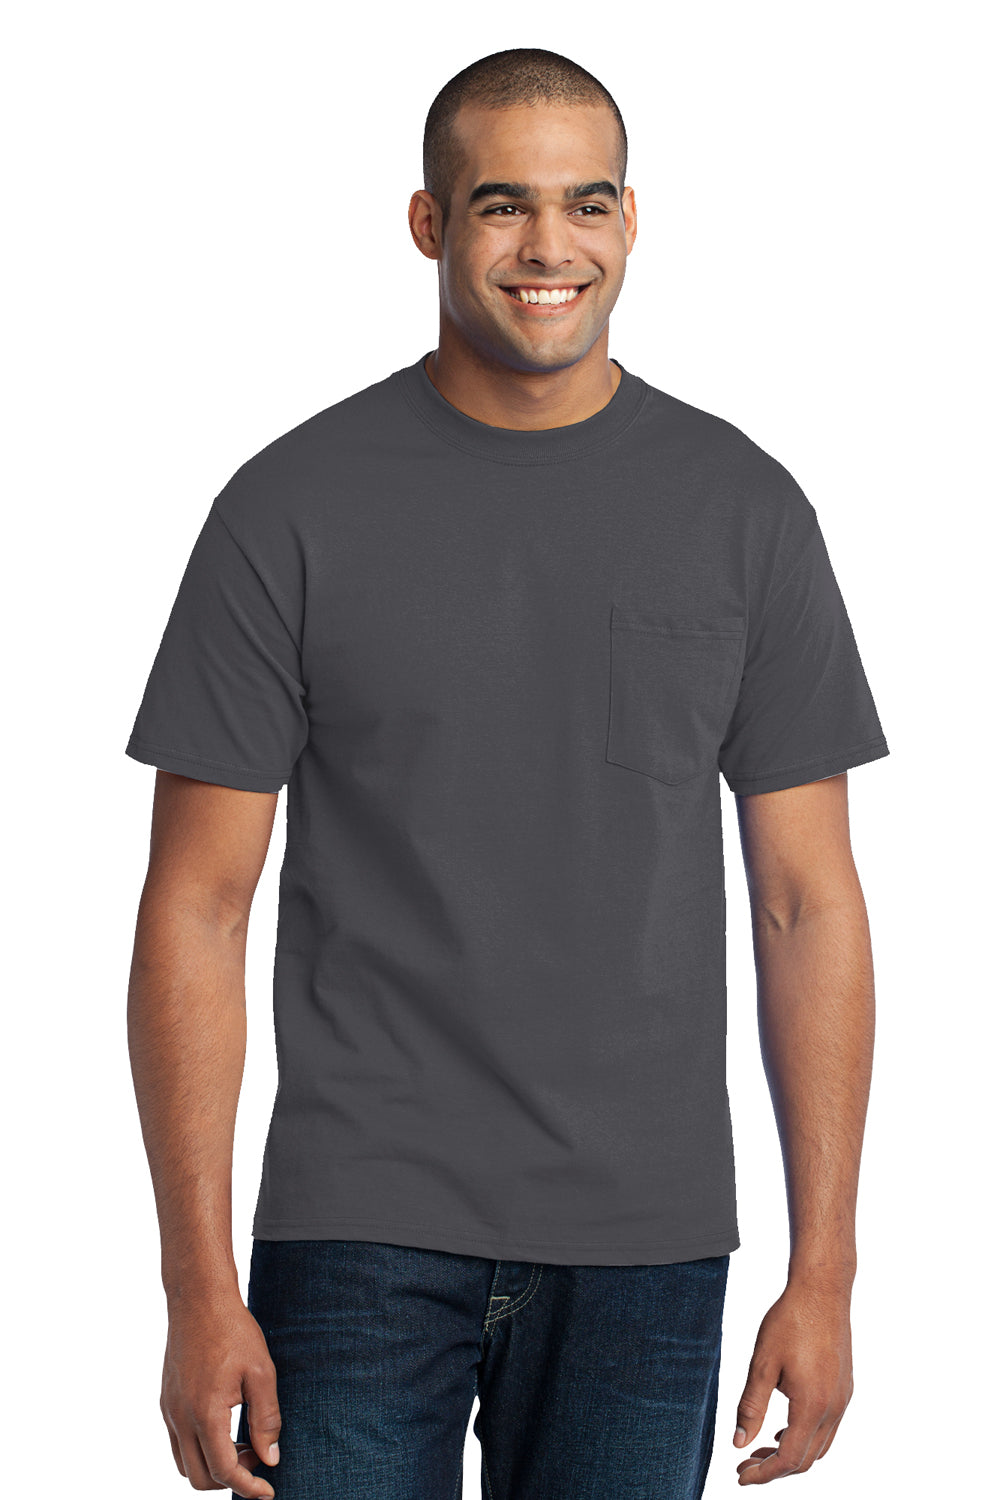 Port & Company PC55P Mens Core Short Sleeve Crewneck T-Shirt w/ Pocket Charcoal Grey Front